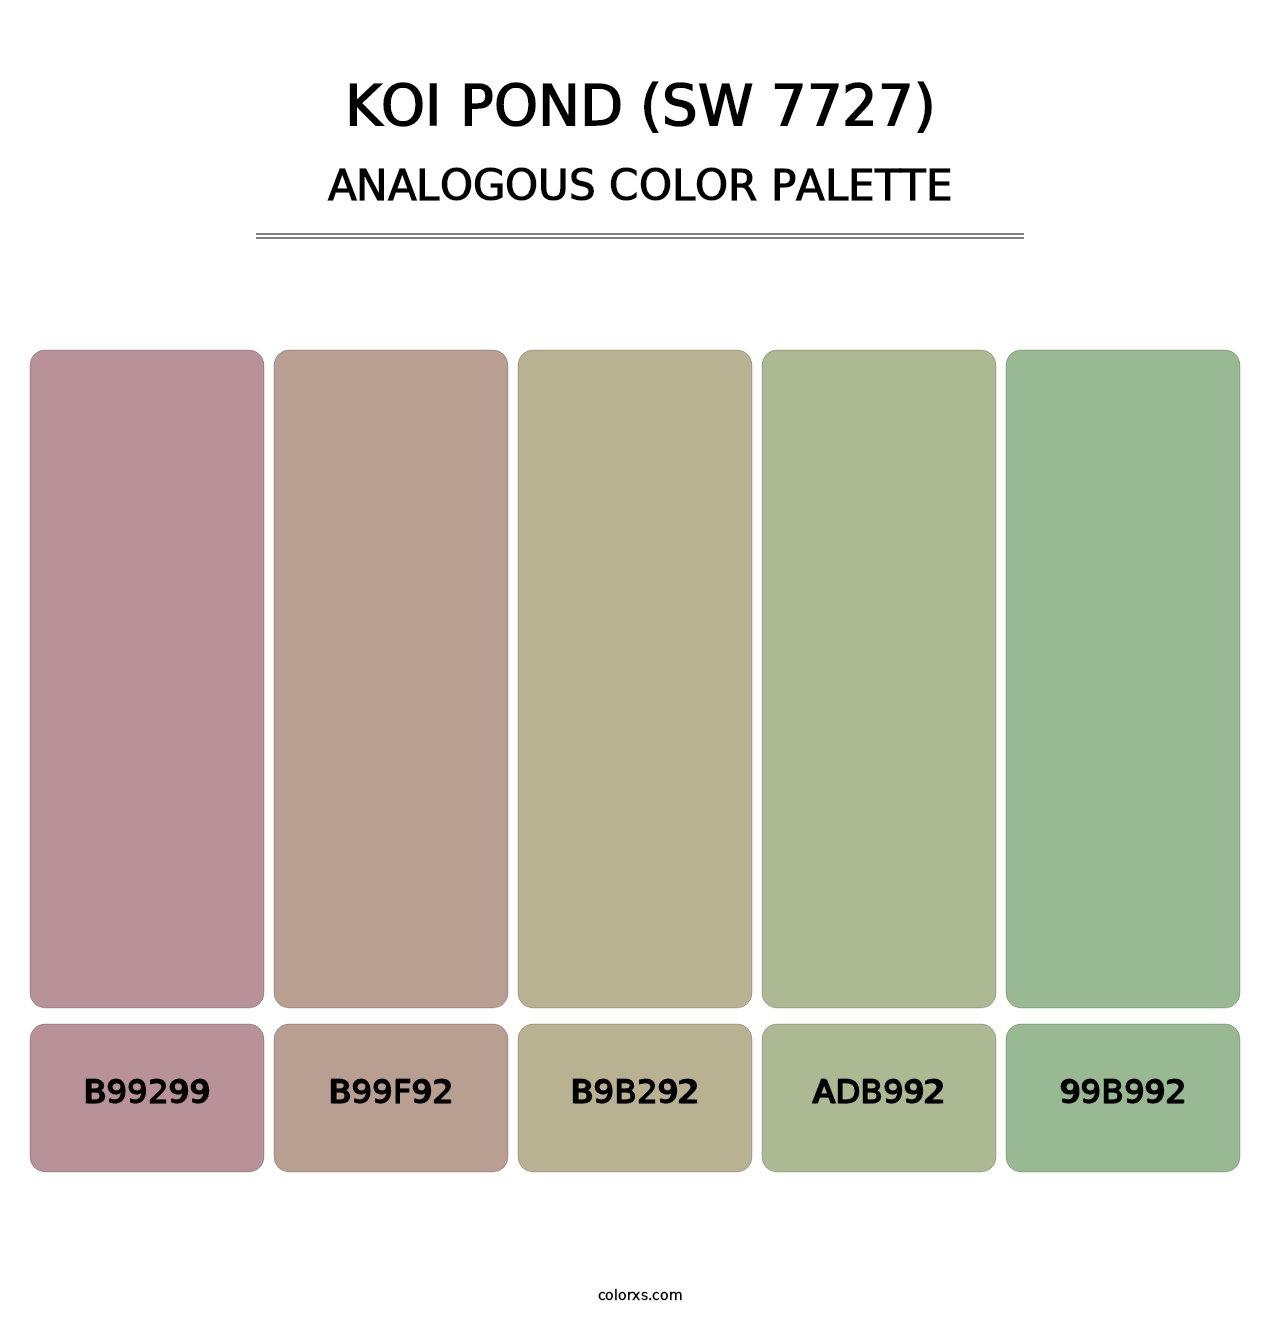 Koi Pond (SW 7727) - Analogous Color Palette